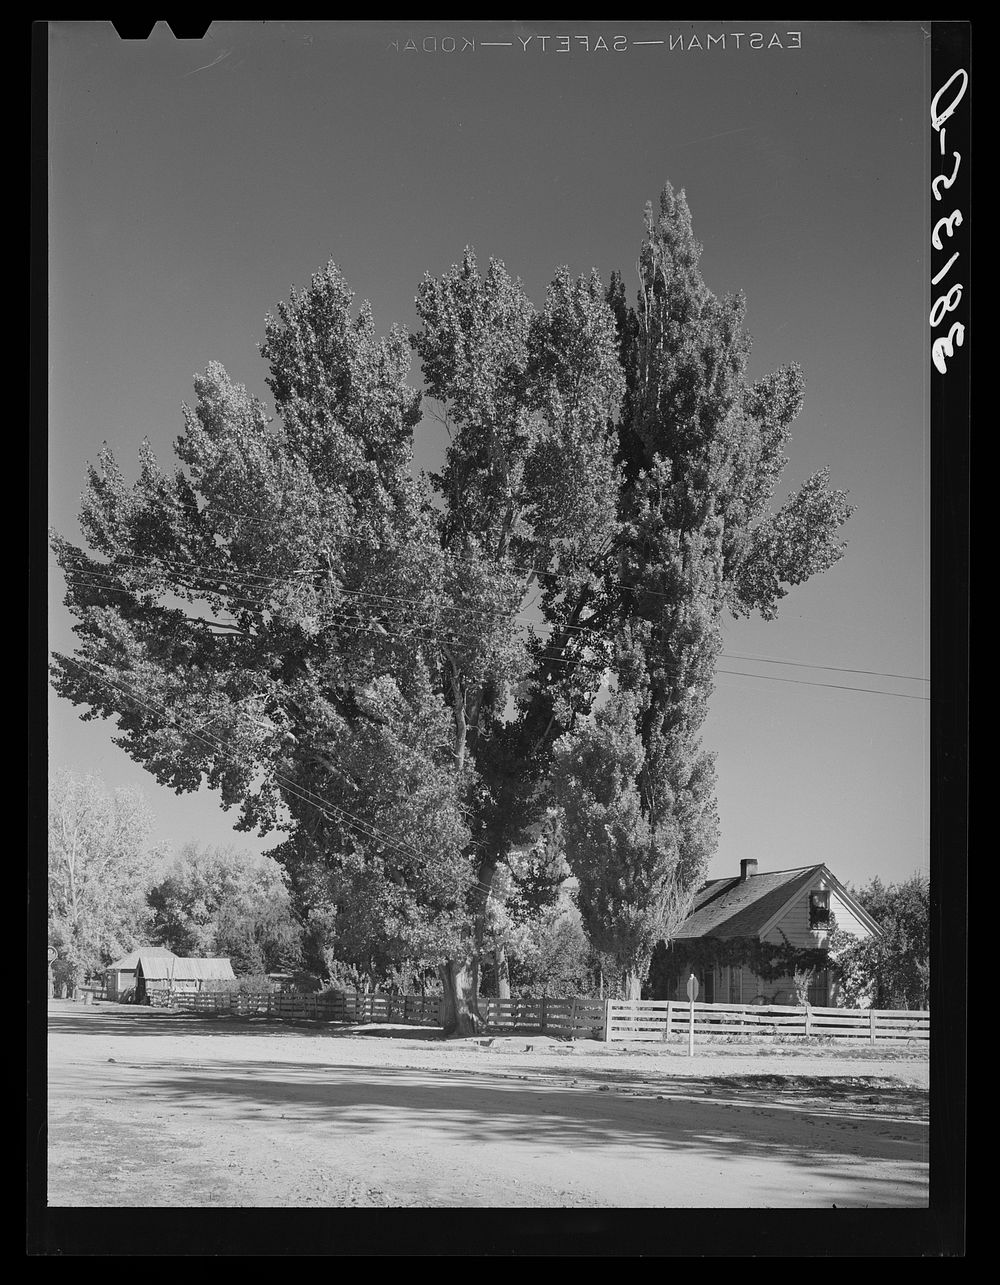 Home of Mormon farmer. Tropic, Utah by Russell Lee